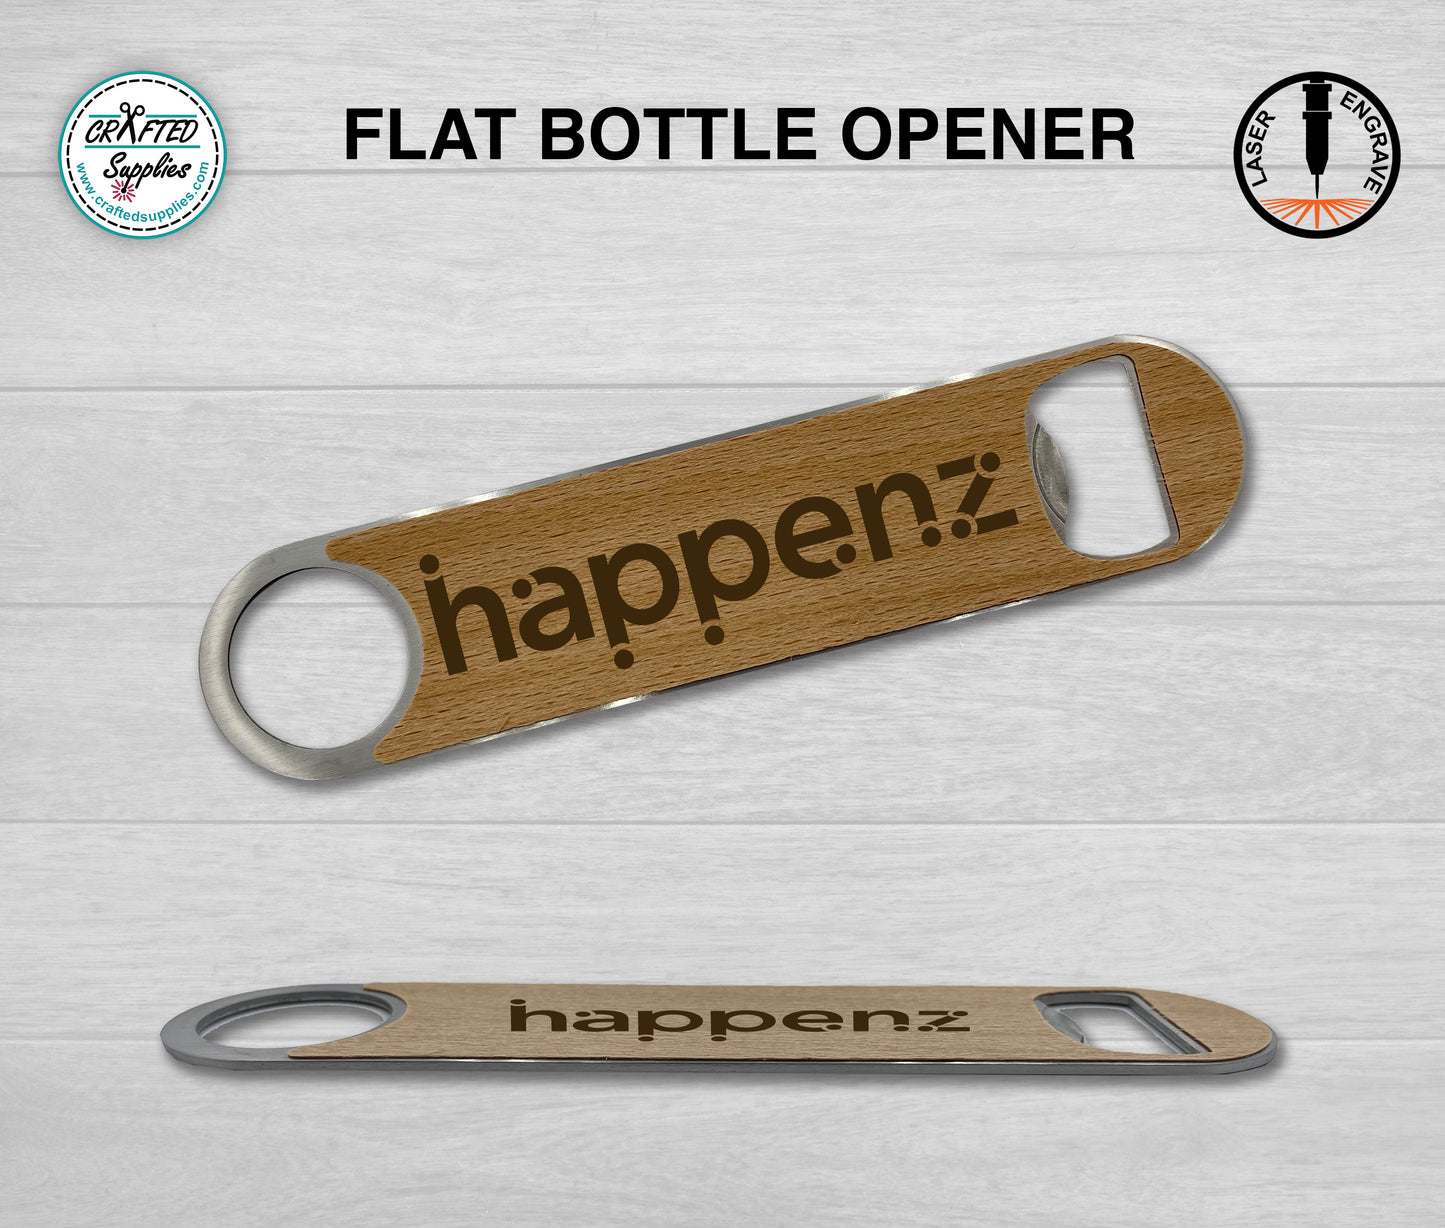 Flat bottle opener with wood veneer for laser engraving